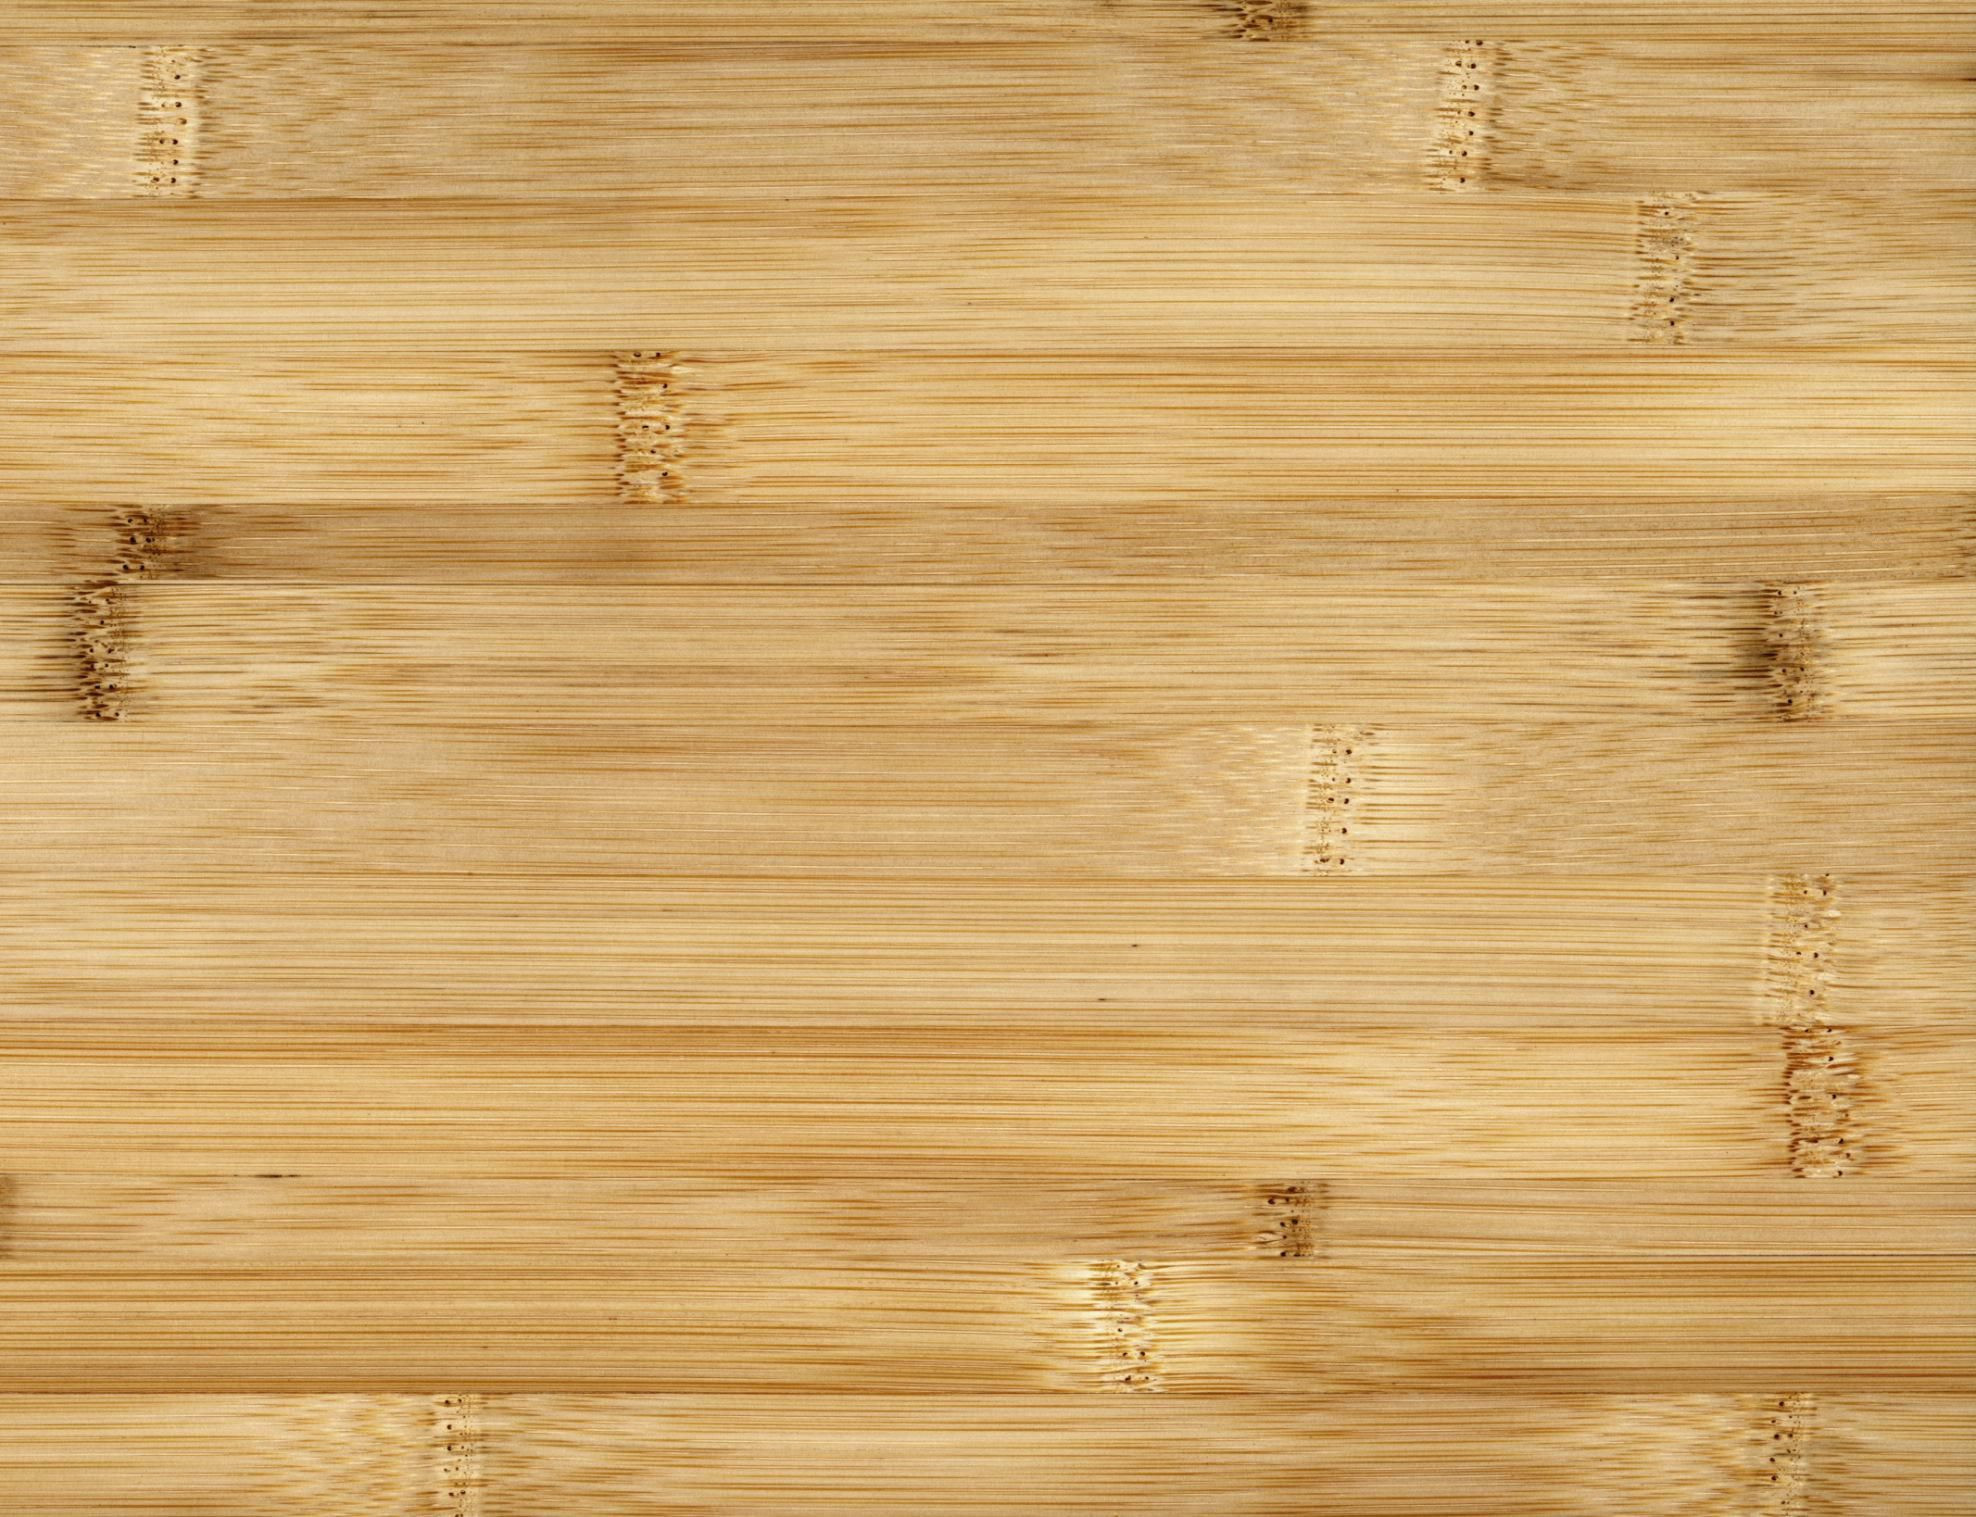 24 Unique Sanding Hardwood Floors Grit 2024 free download sanding hardwood floors grit of how to clean bamboo flooring with regard to 200266305 001 56a2fd815f9b58b7d0d000cd